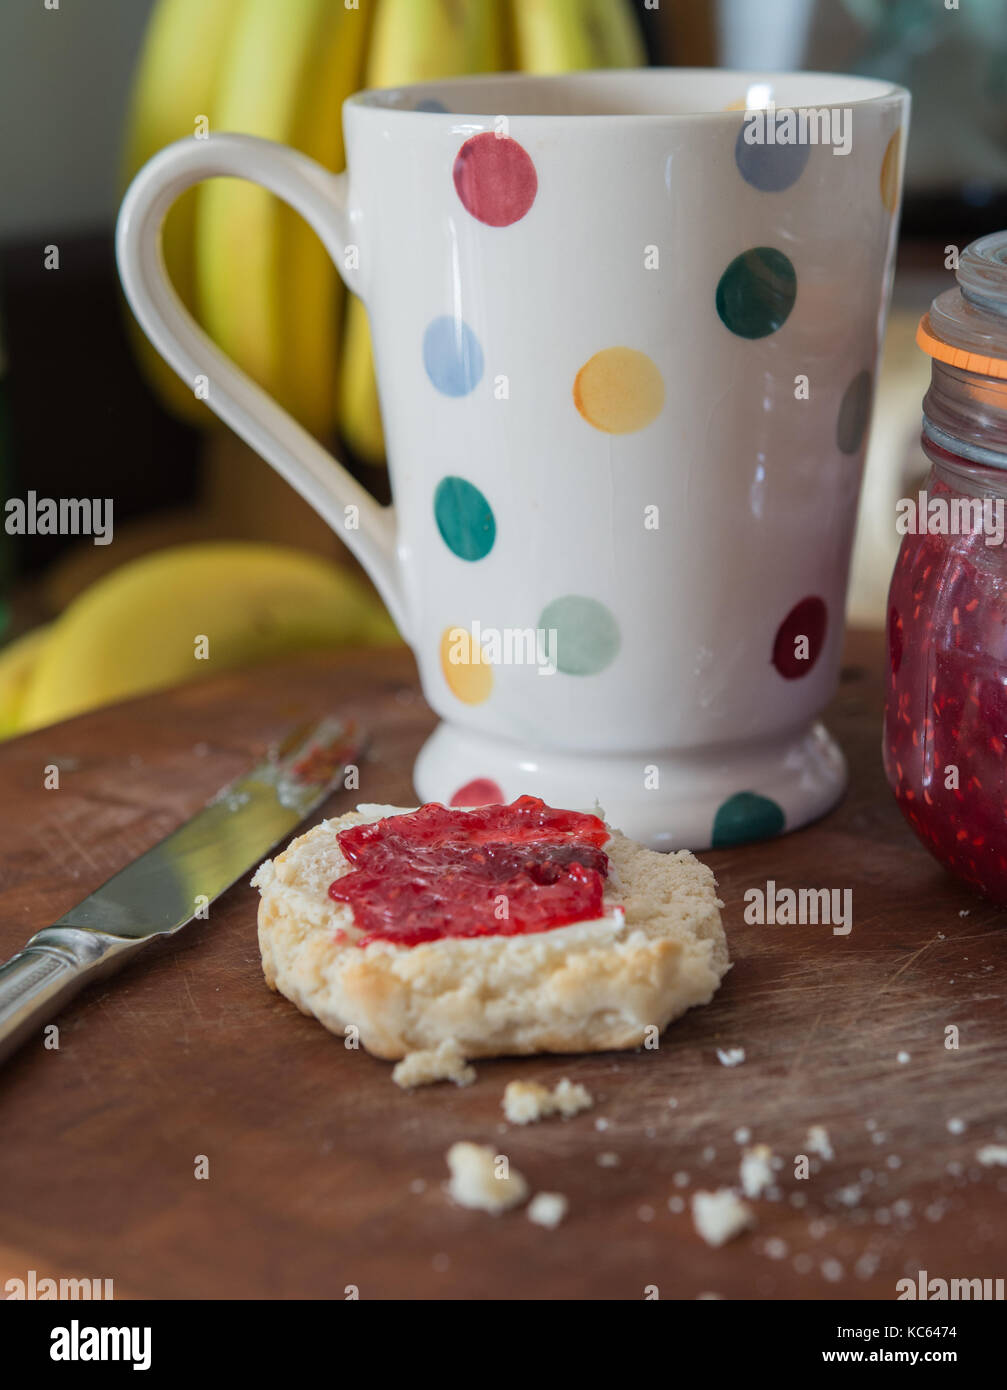 Scone with raspberry jam and spotty mug Stock Photo